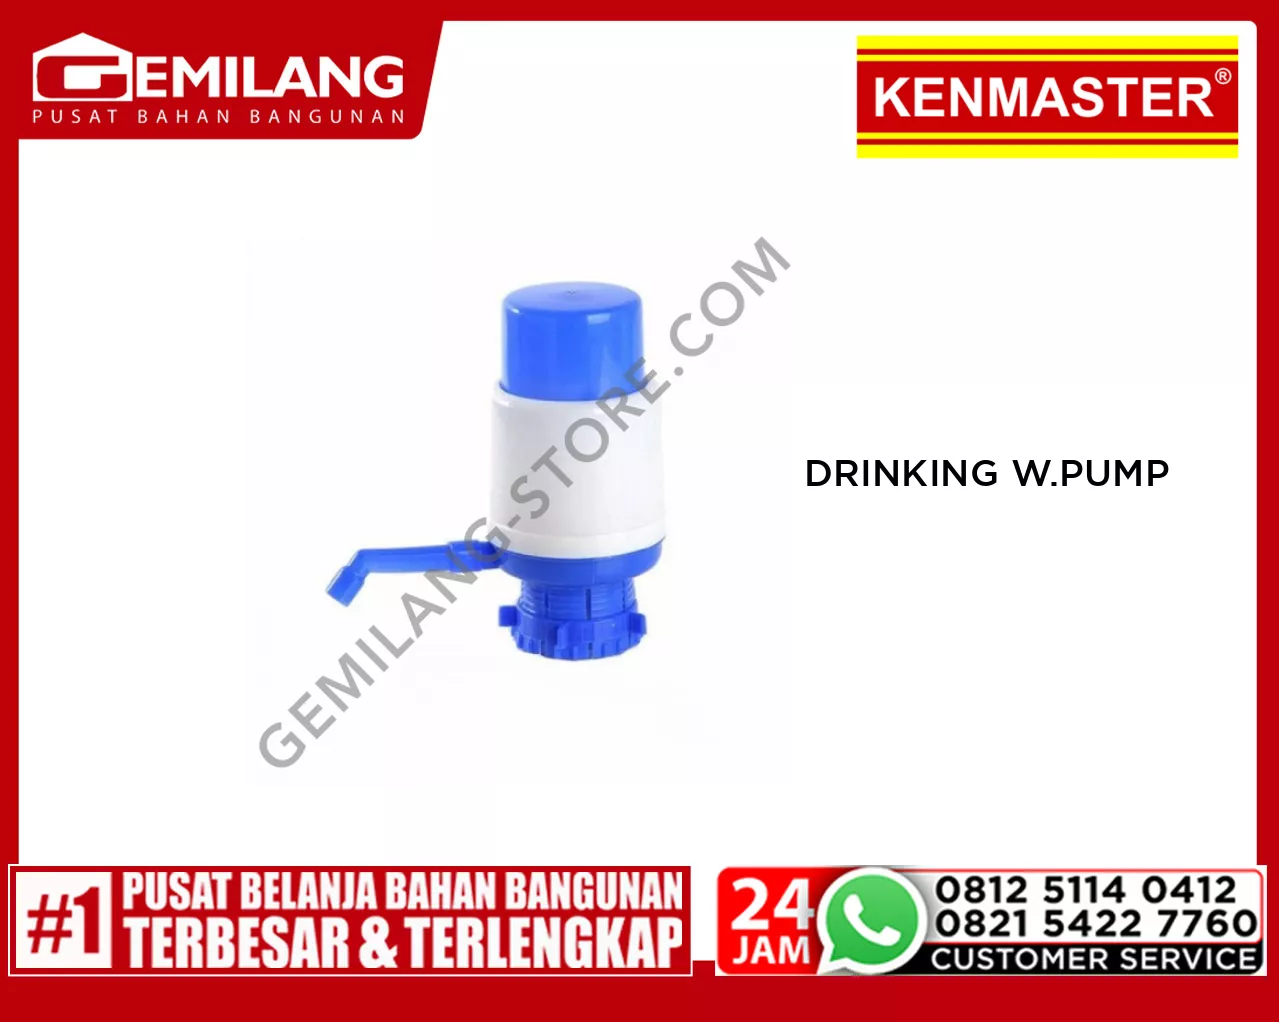 KENMASTER DRINKING WATER PUMP